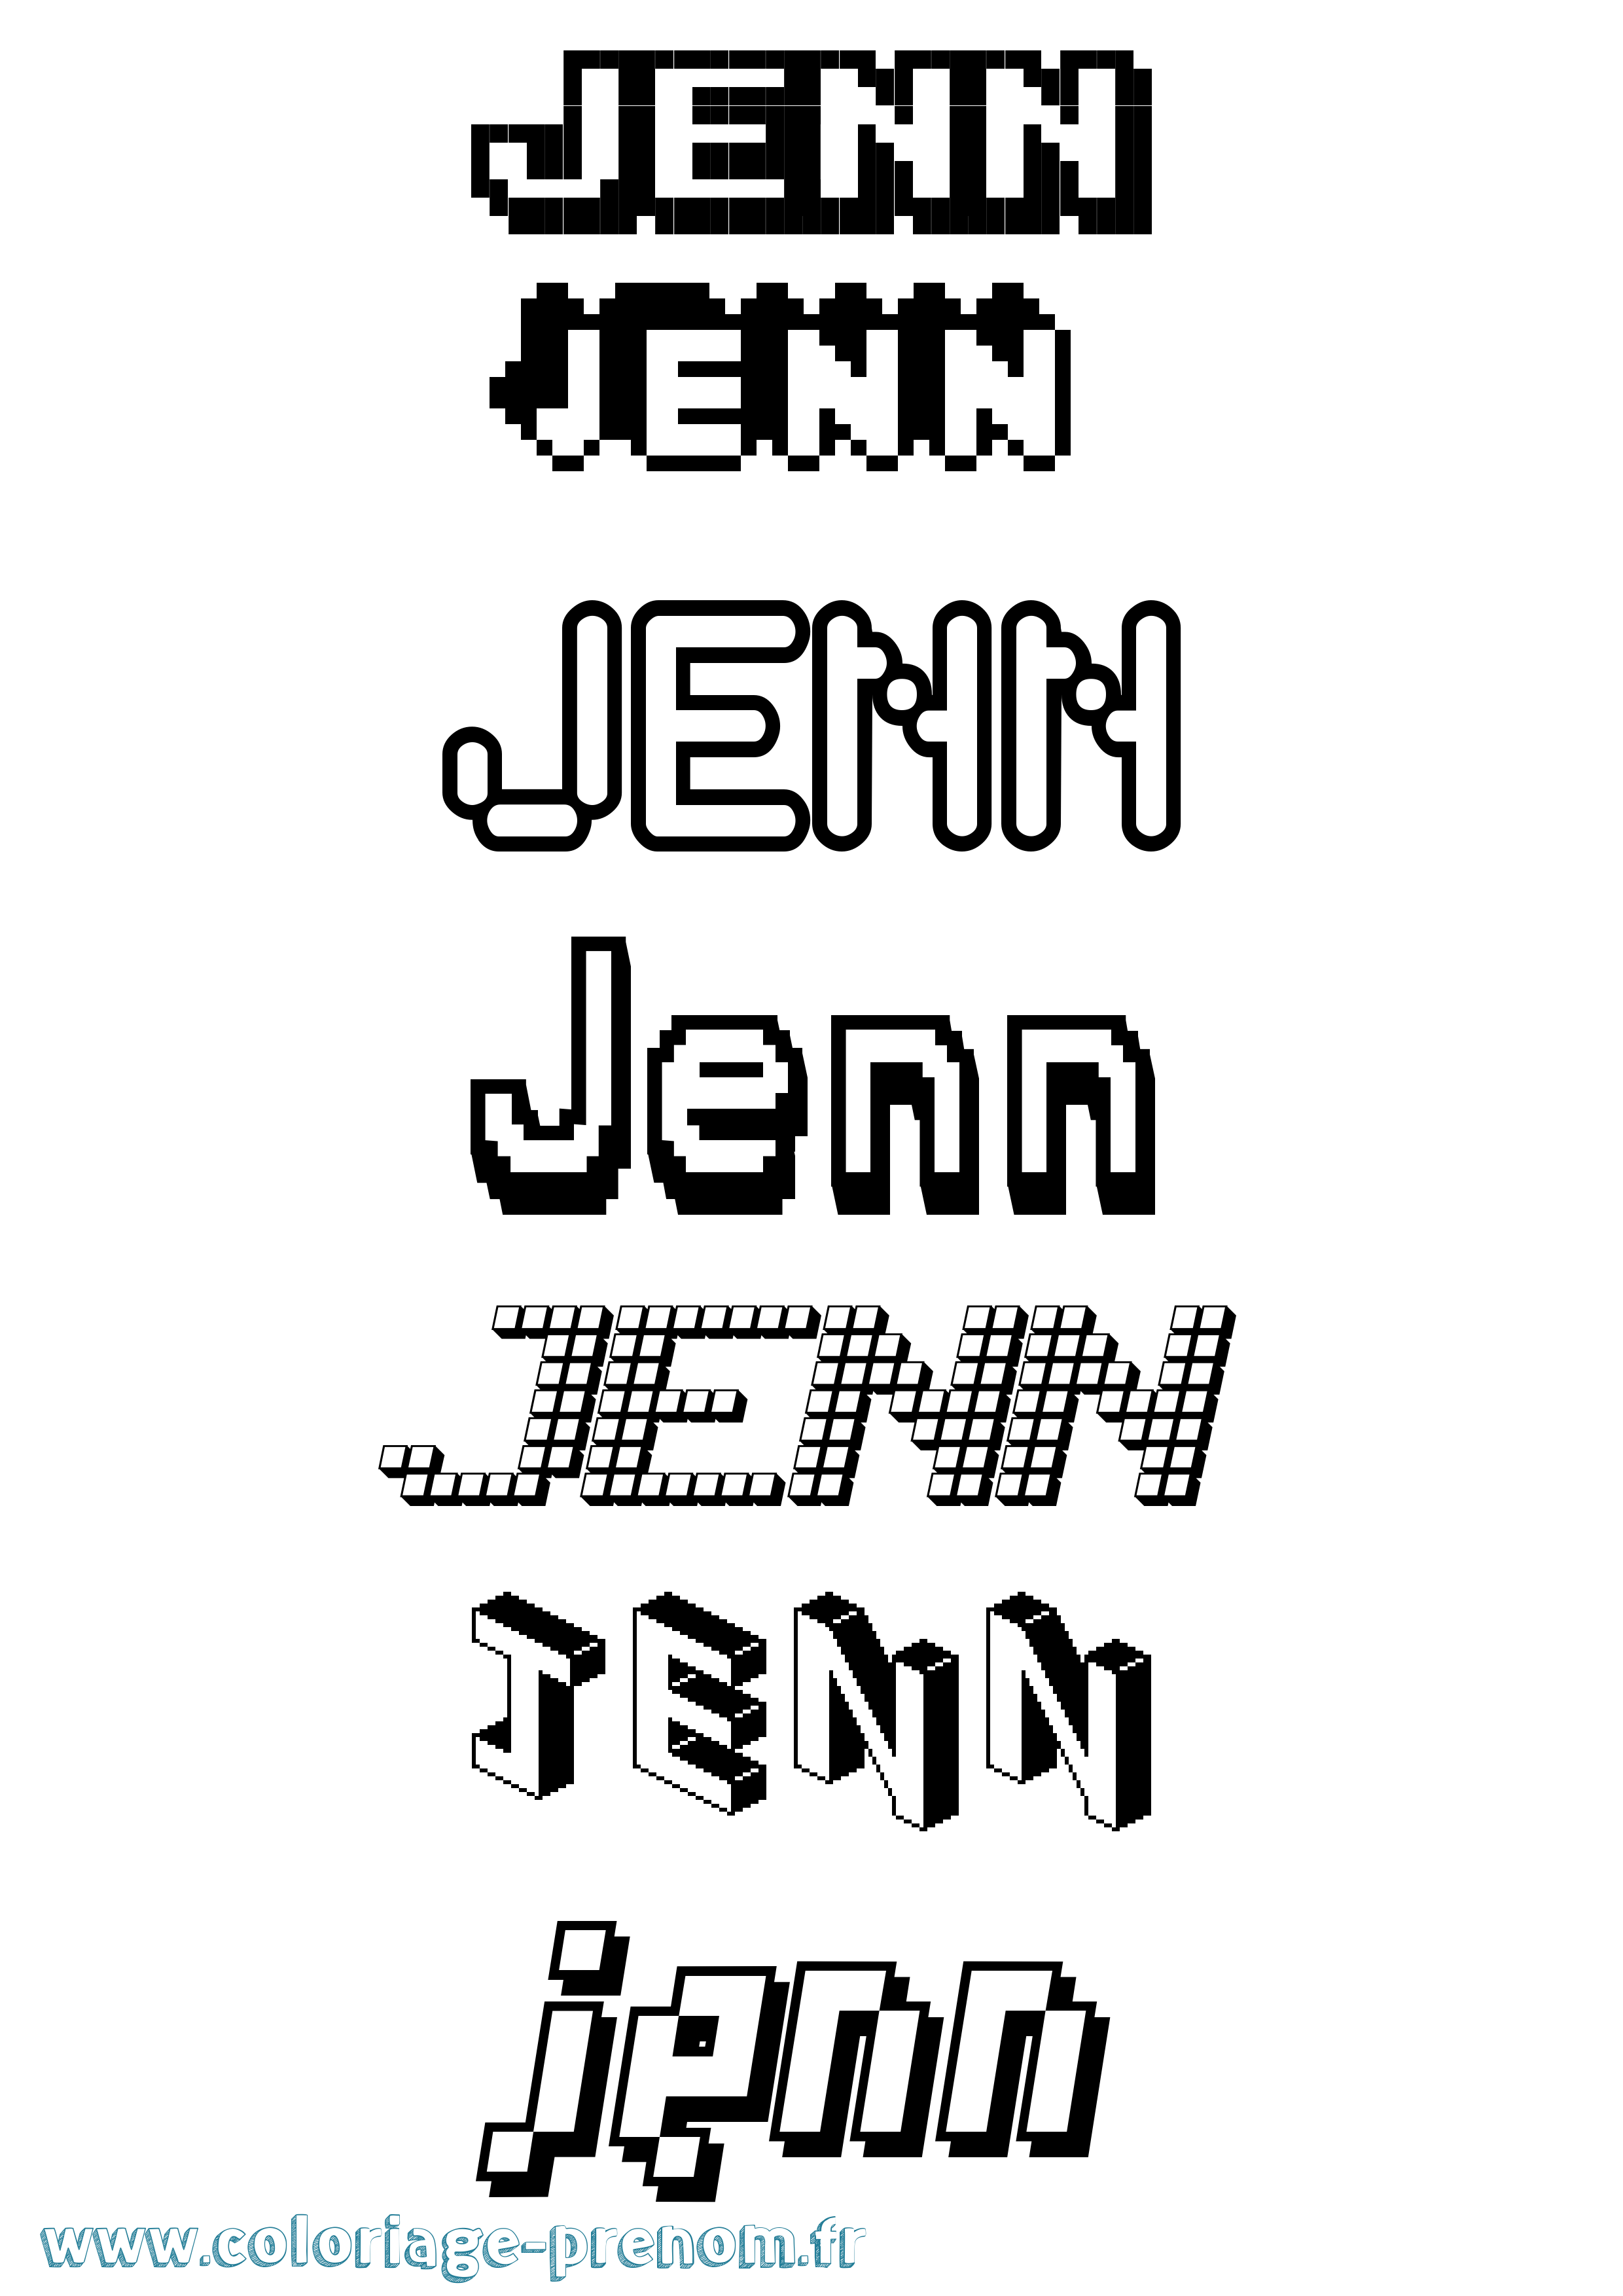 Coloriage prénom Jenn Pixel